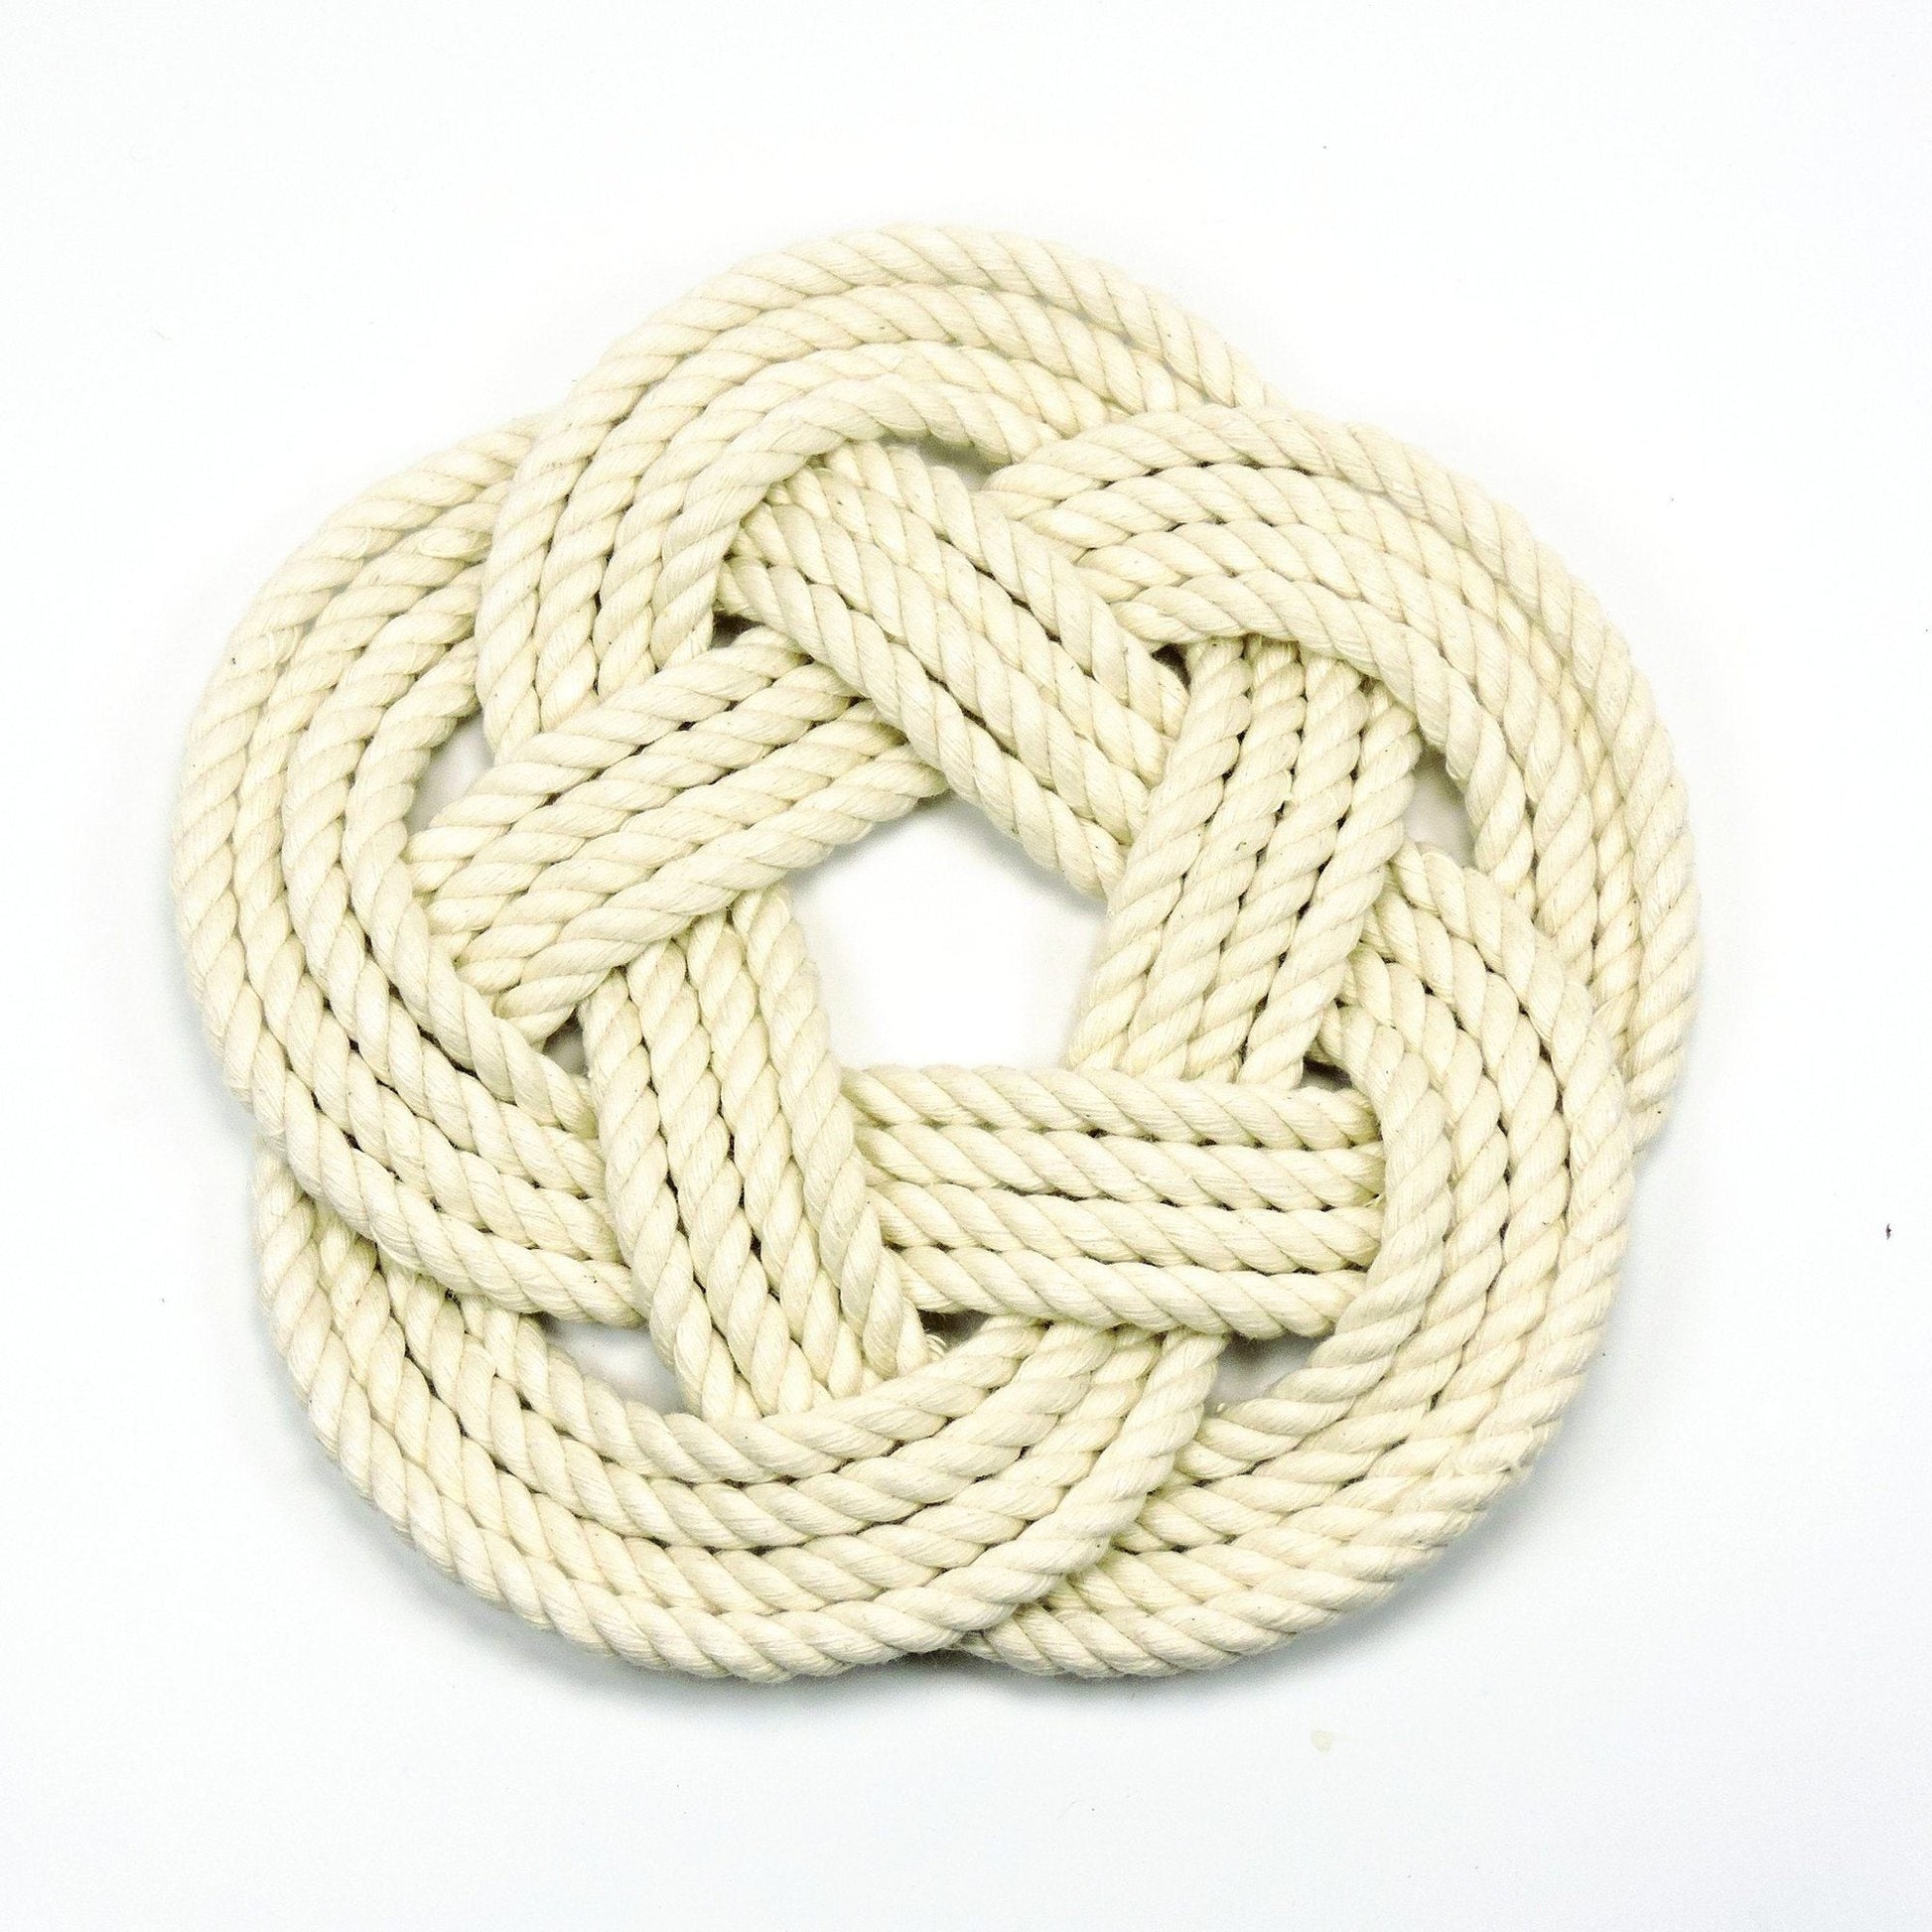 Nautical Sailor Knot Woven Rope Round Cotton Trivet 7-in - White - Mellow Monkey